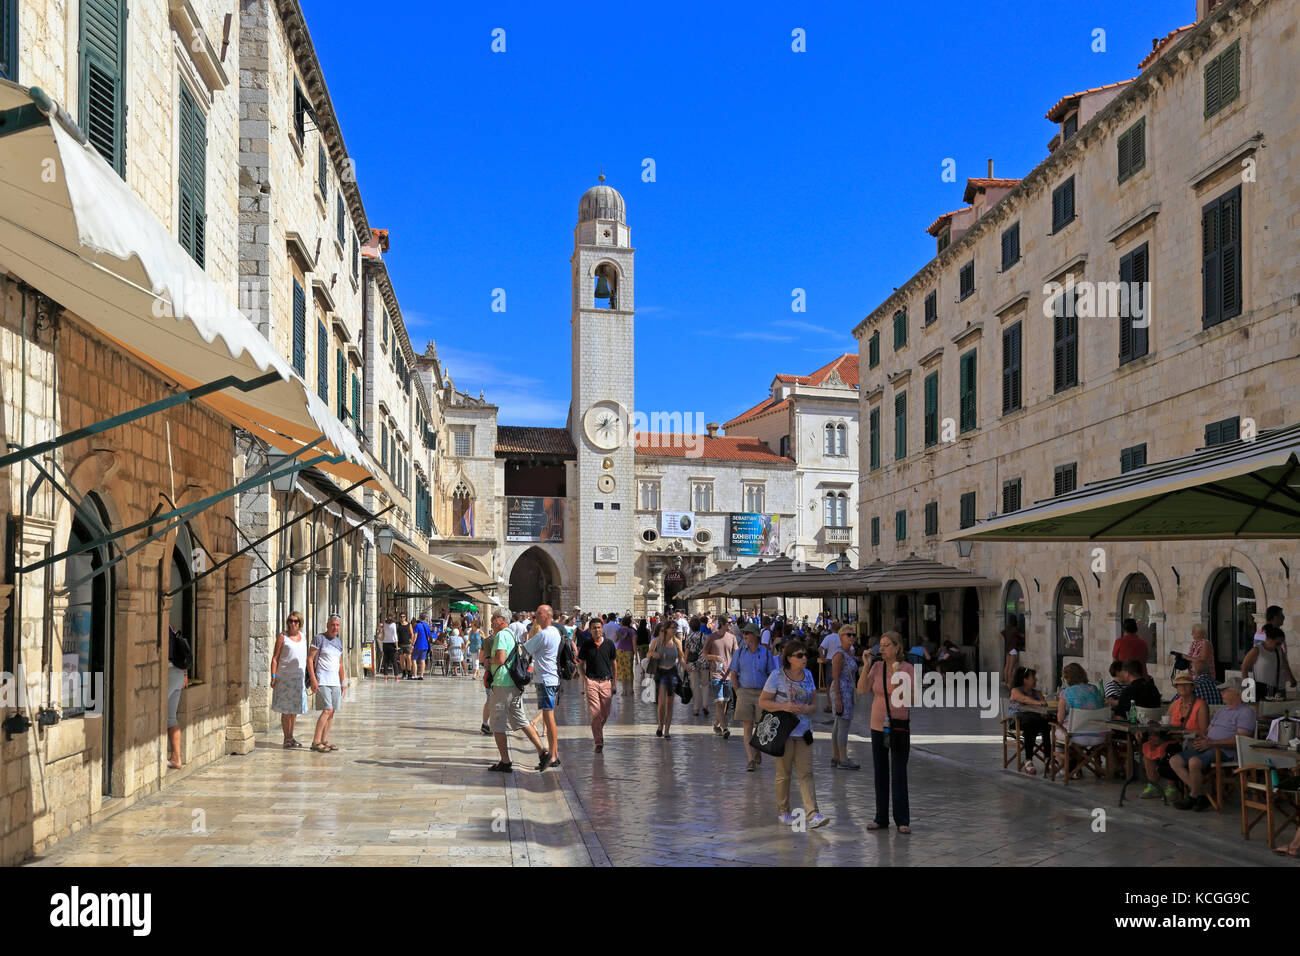 Stradun main street and Clock Tower in Luza Square, Dubrovnik Old City, Croatia, UNESCO world heritage site, Dalmatia, Dalmatian Coast, Europe. Stock Photo